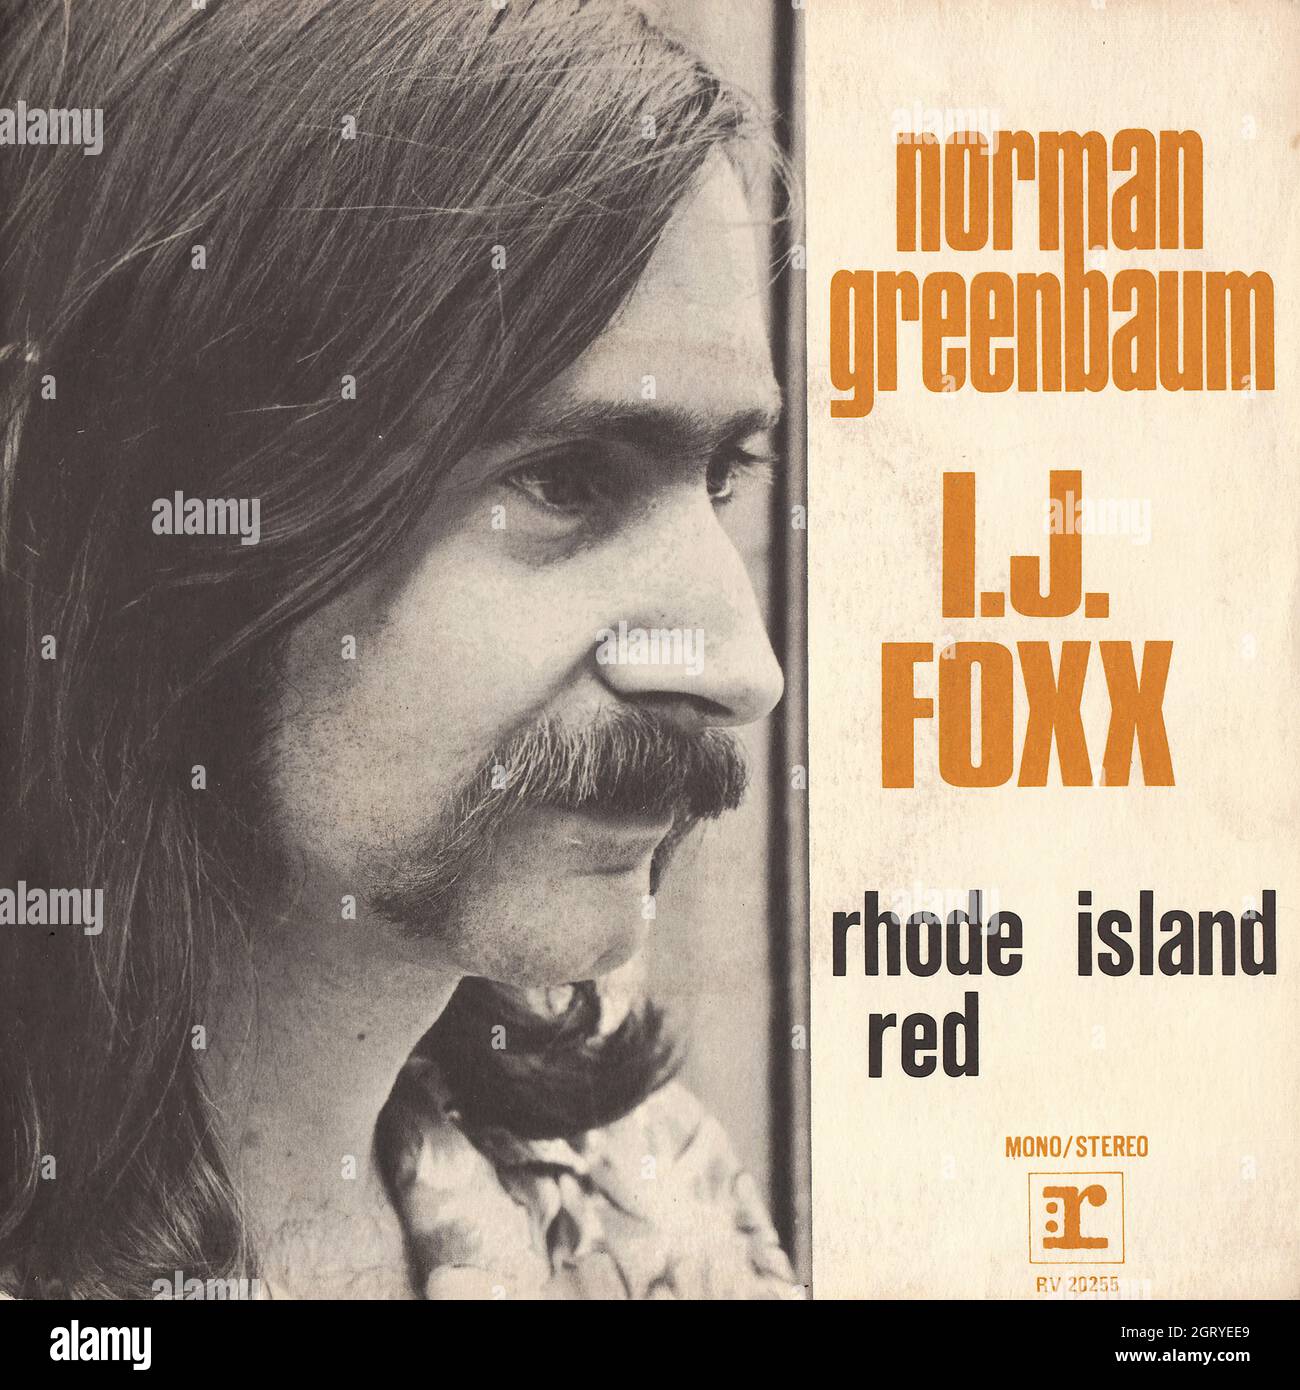 Norman Greenbaum - I.J. Foxx - Rhode Island red 45rpm - Vintage Vinyl Record Cover Stock Photo